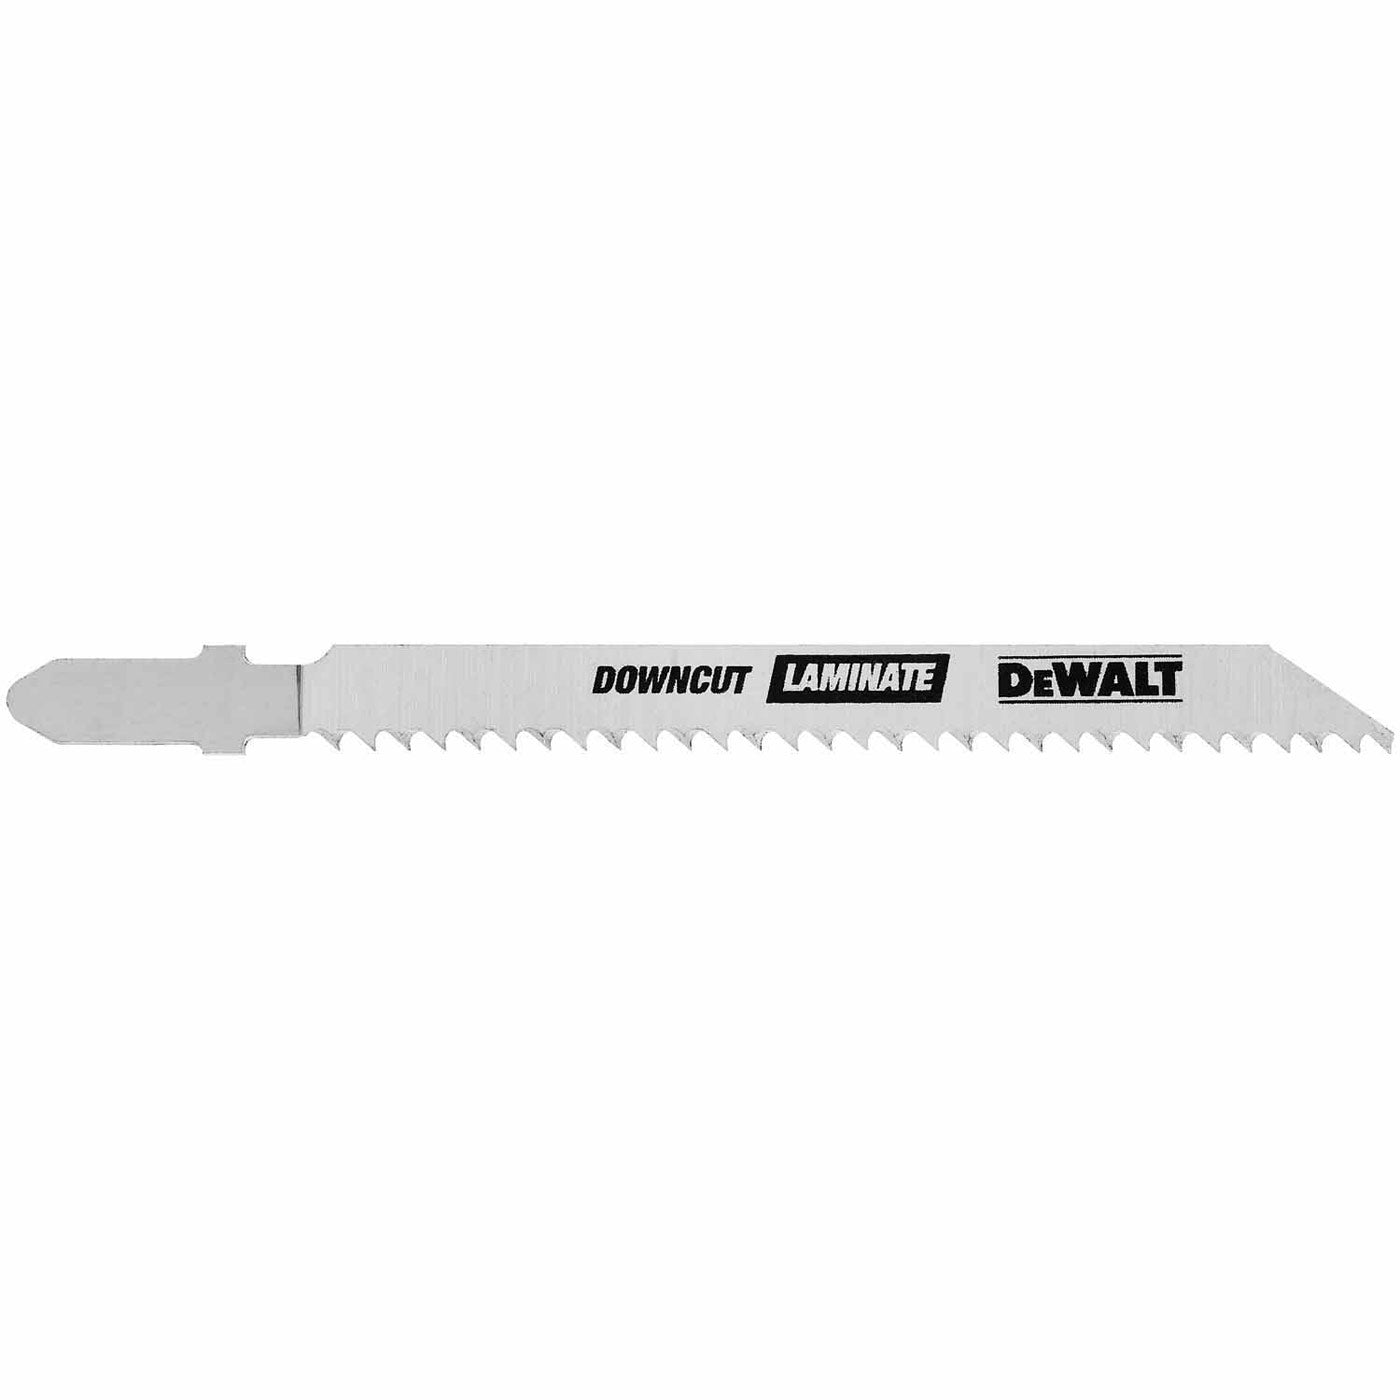 DeWalt DW3762-5 4" 10 TPI T-Shank Laminate Down Cutting Cobalt Steel Jig Saw Blade - 5 Pack